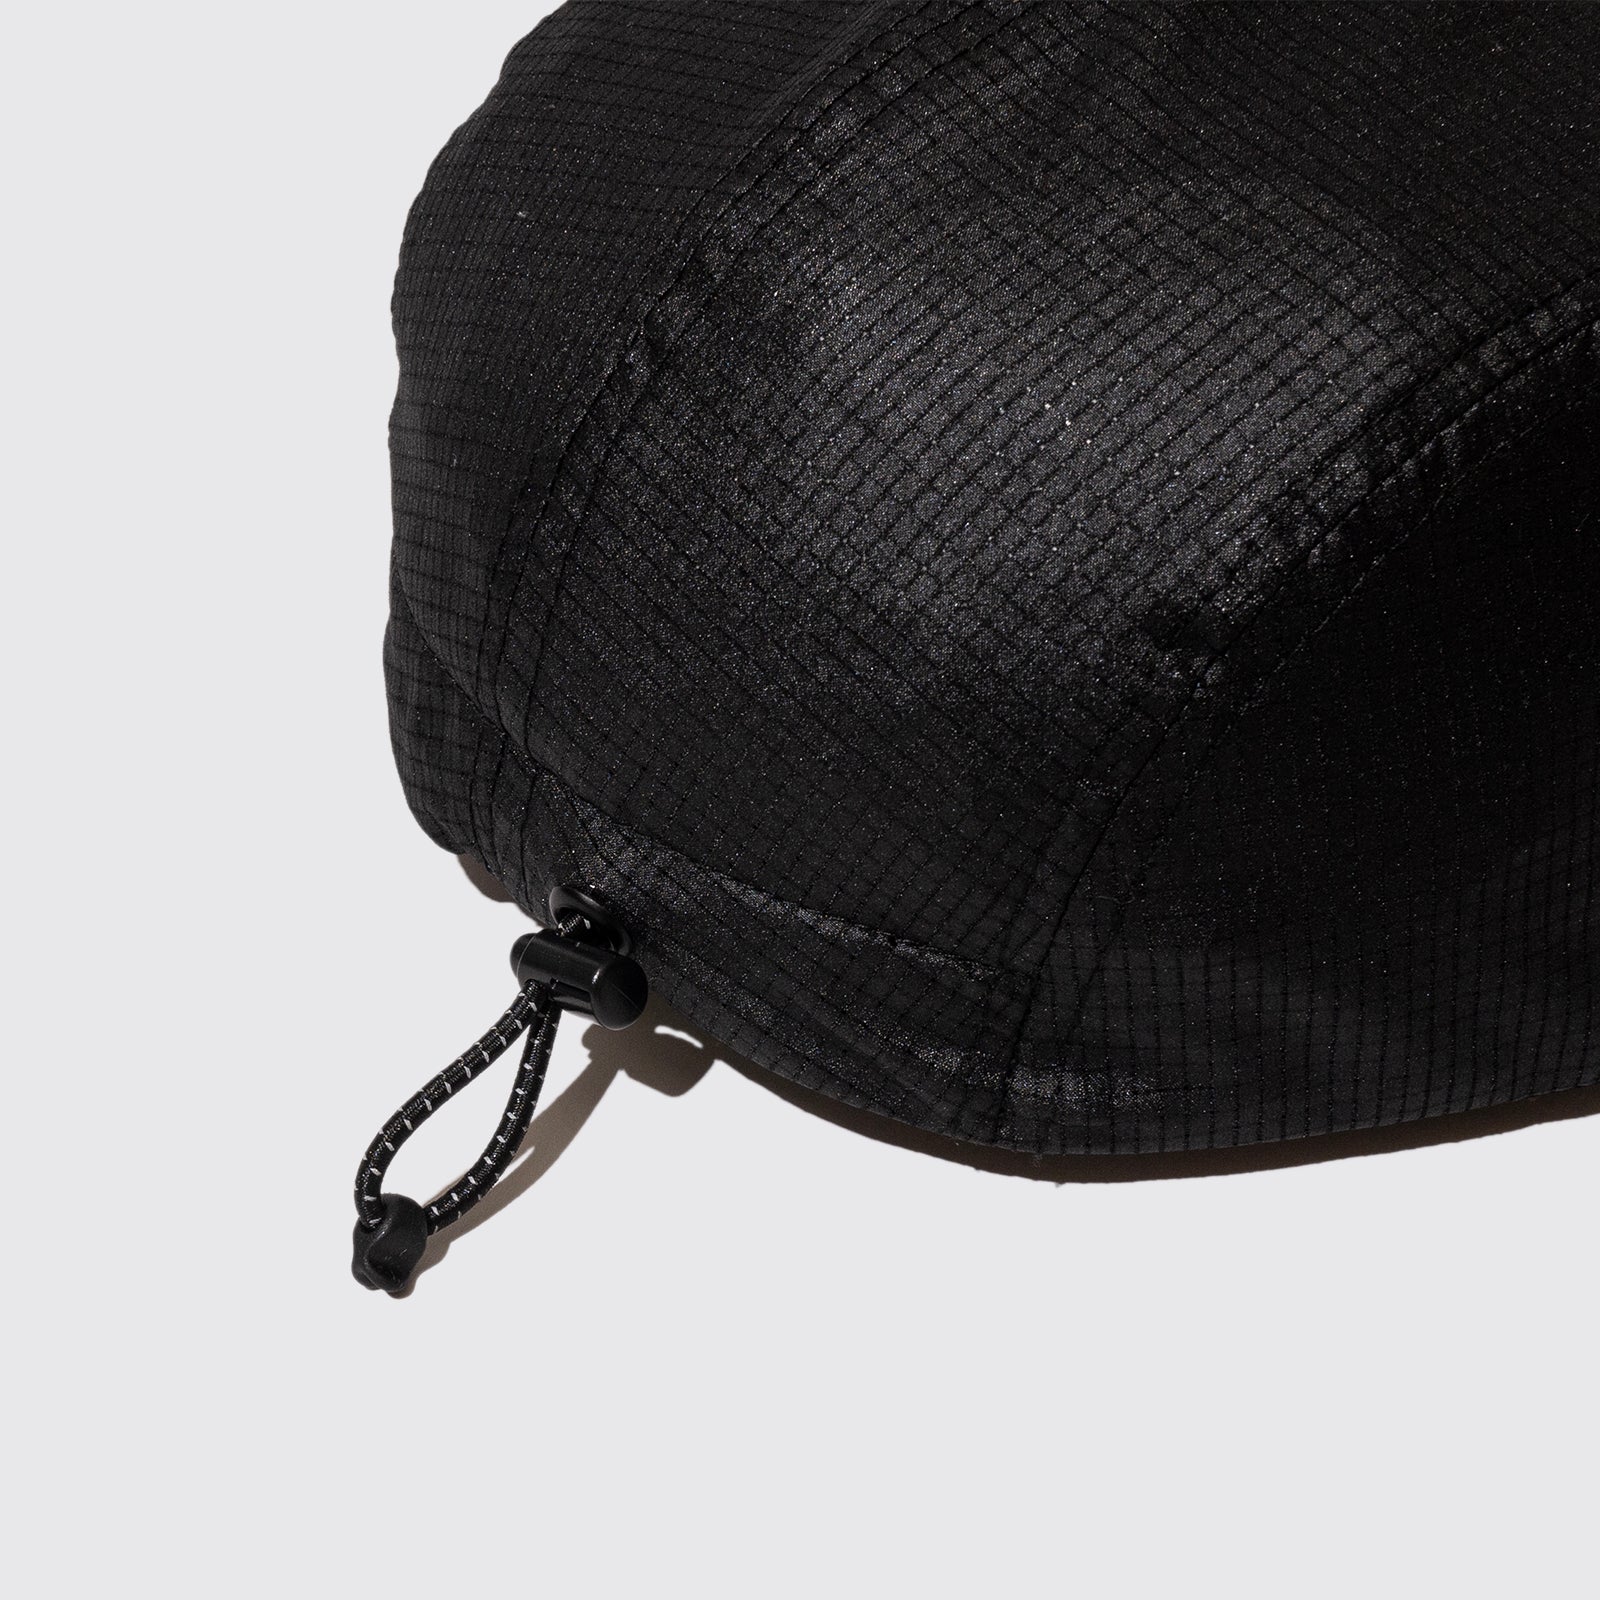 DMTN WAX CAP (Black)